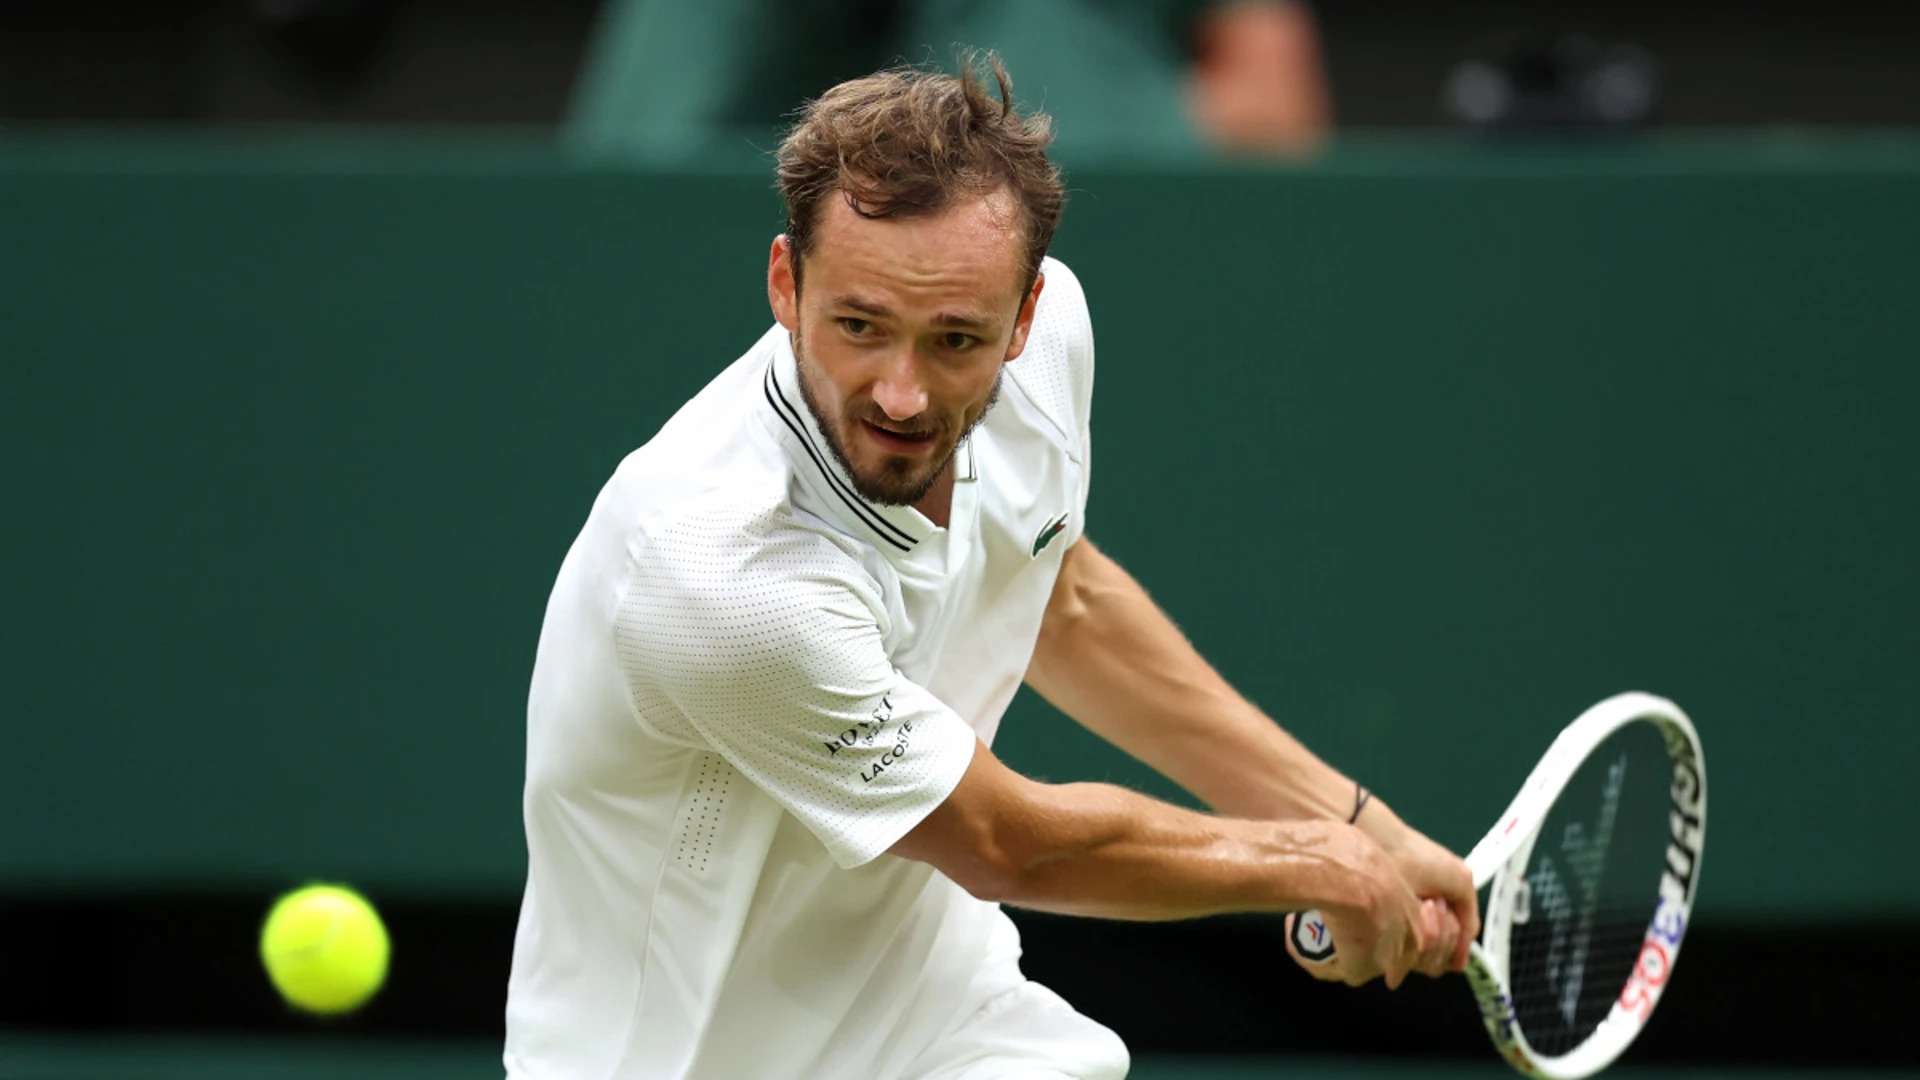 Hard-court specialist Medvedev gunning for grasscourt breakthrough at Wimbledon